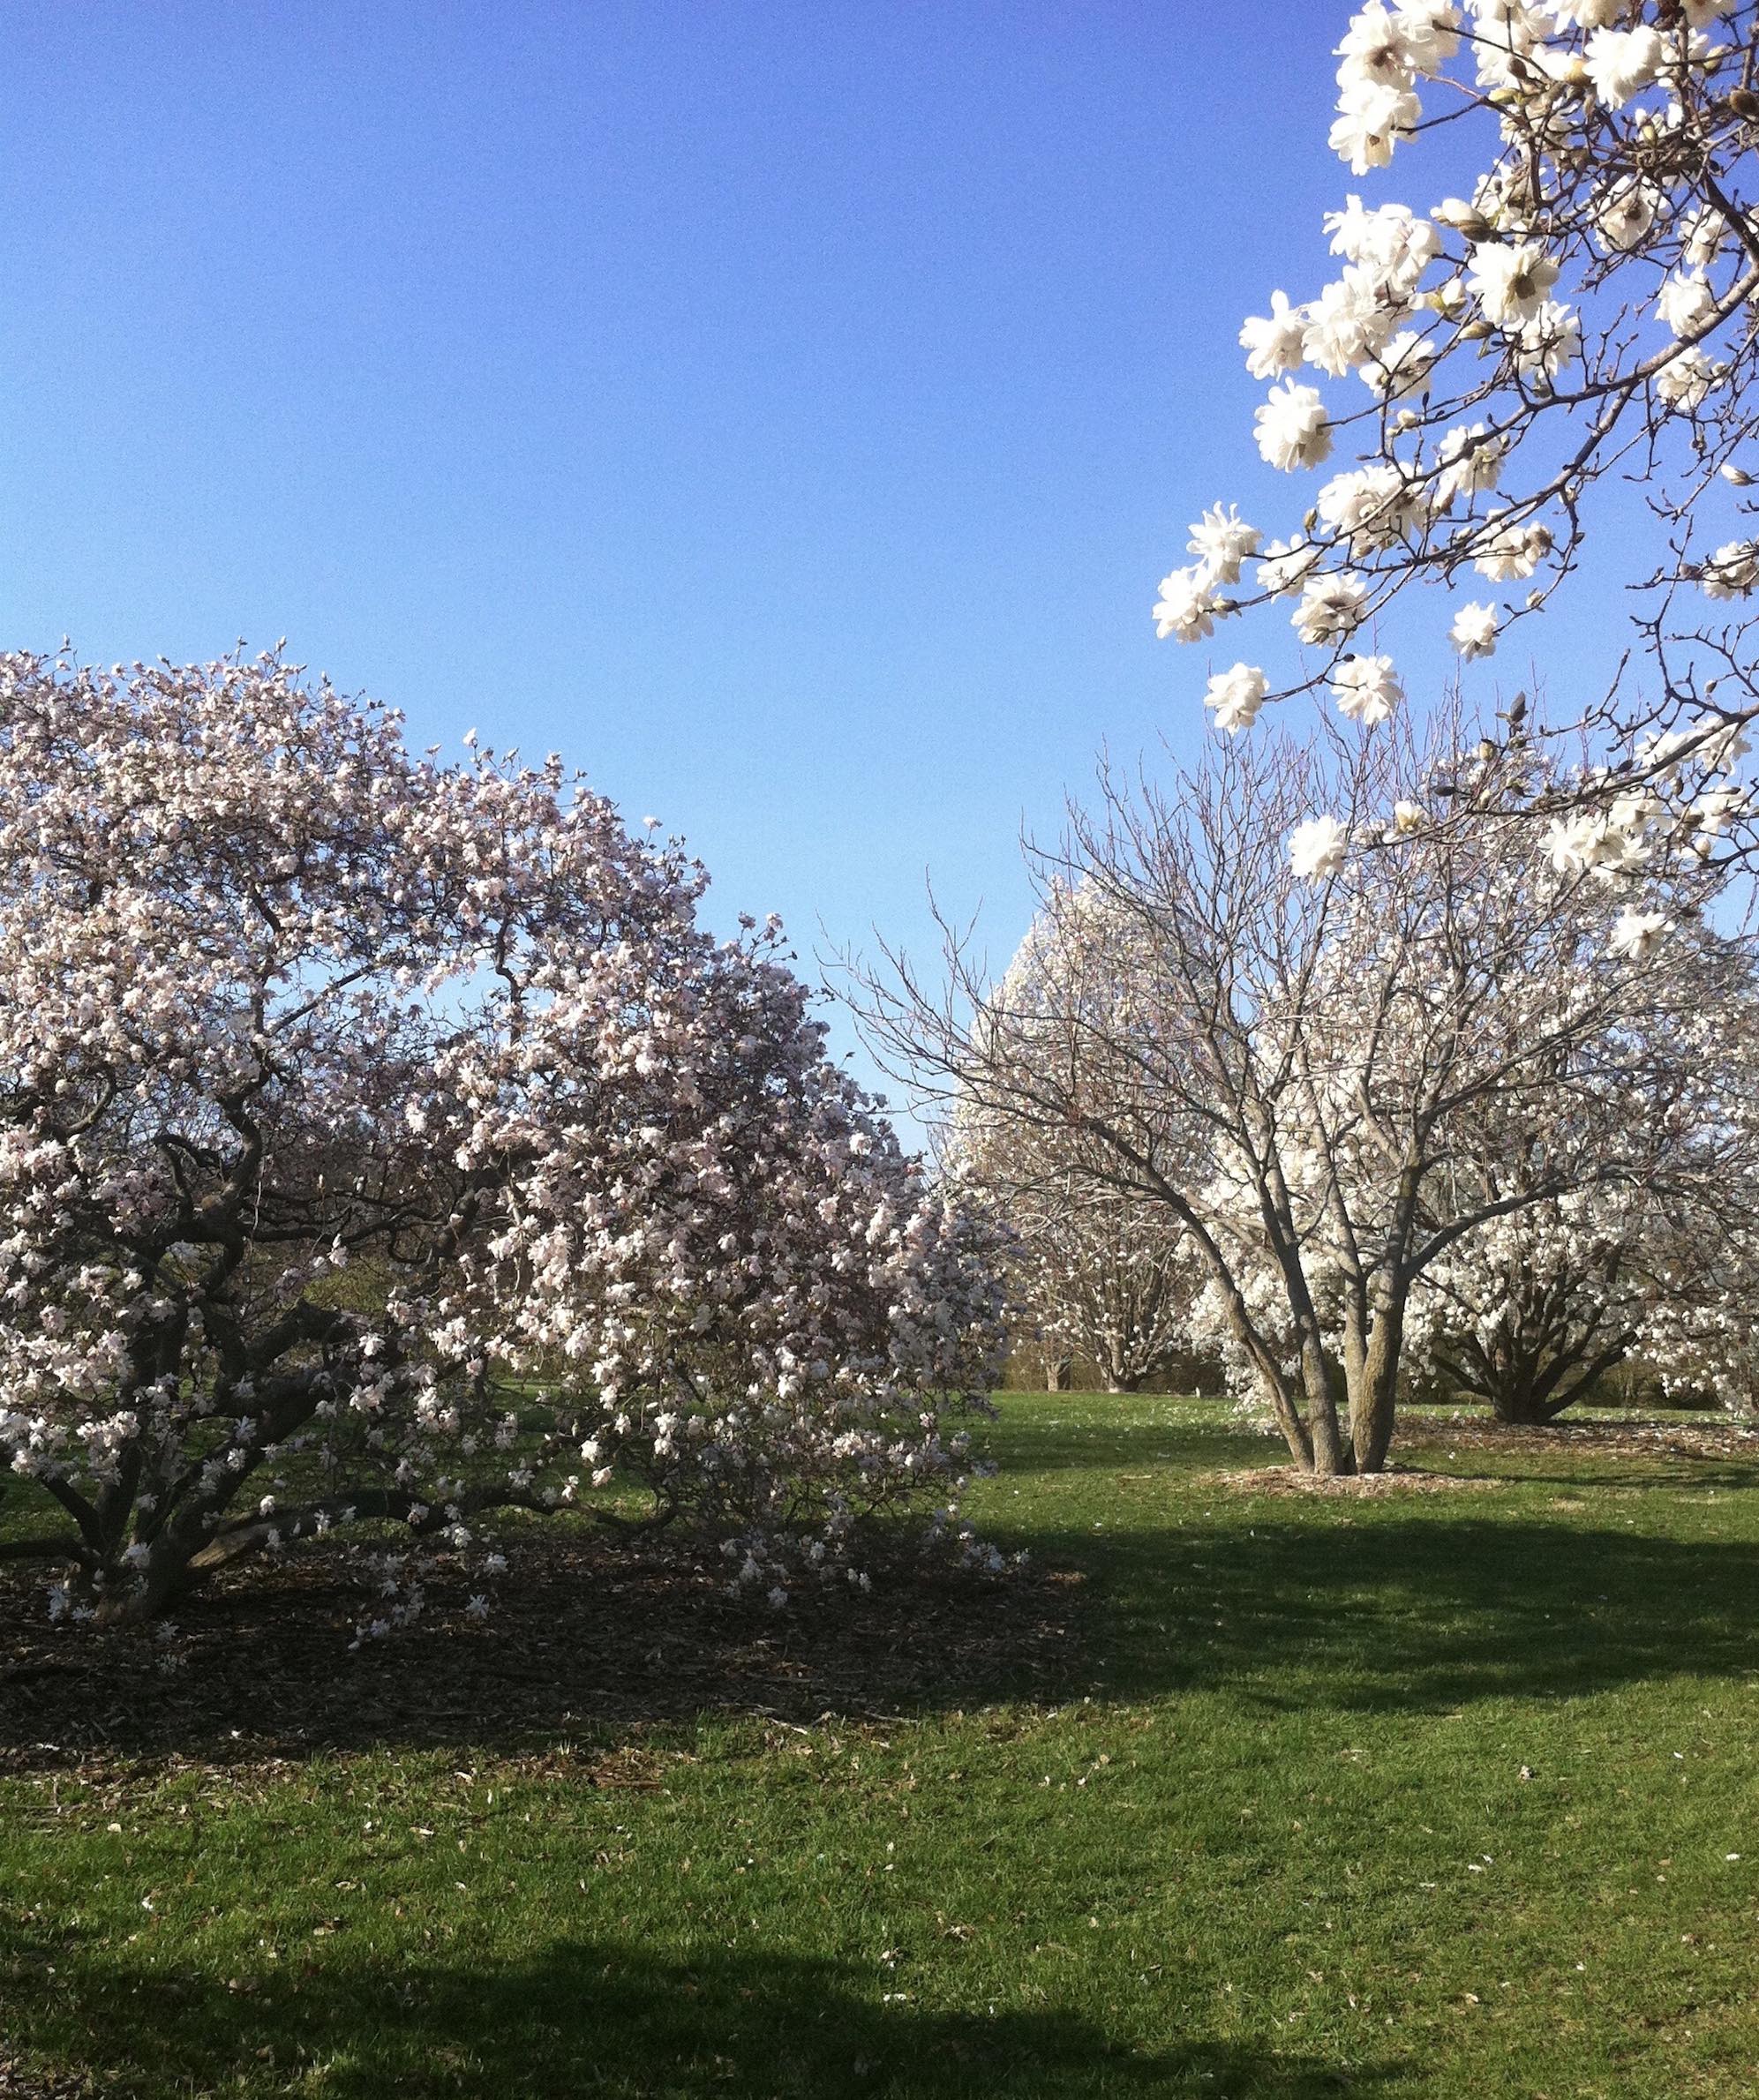 Longenecker Gardens at the University of Wisconsin Arboretum on March 20, 2012.